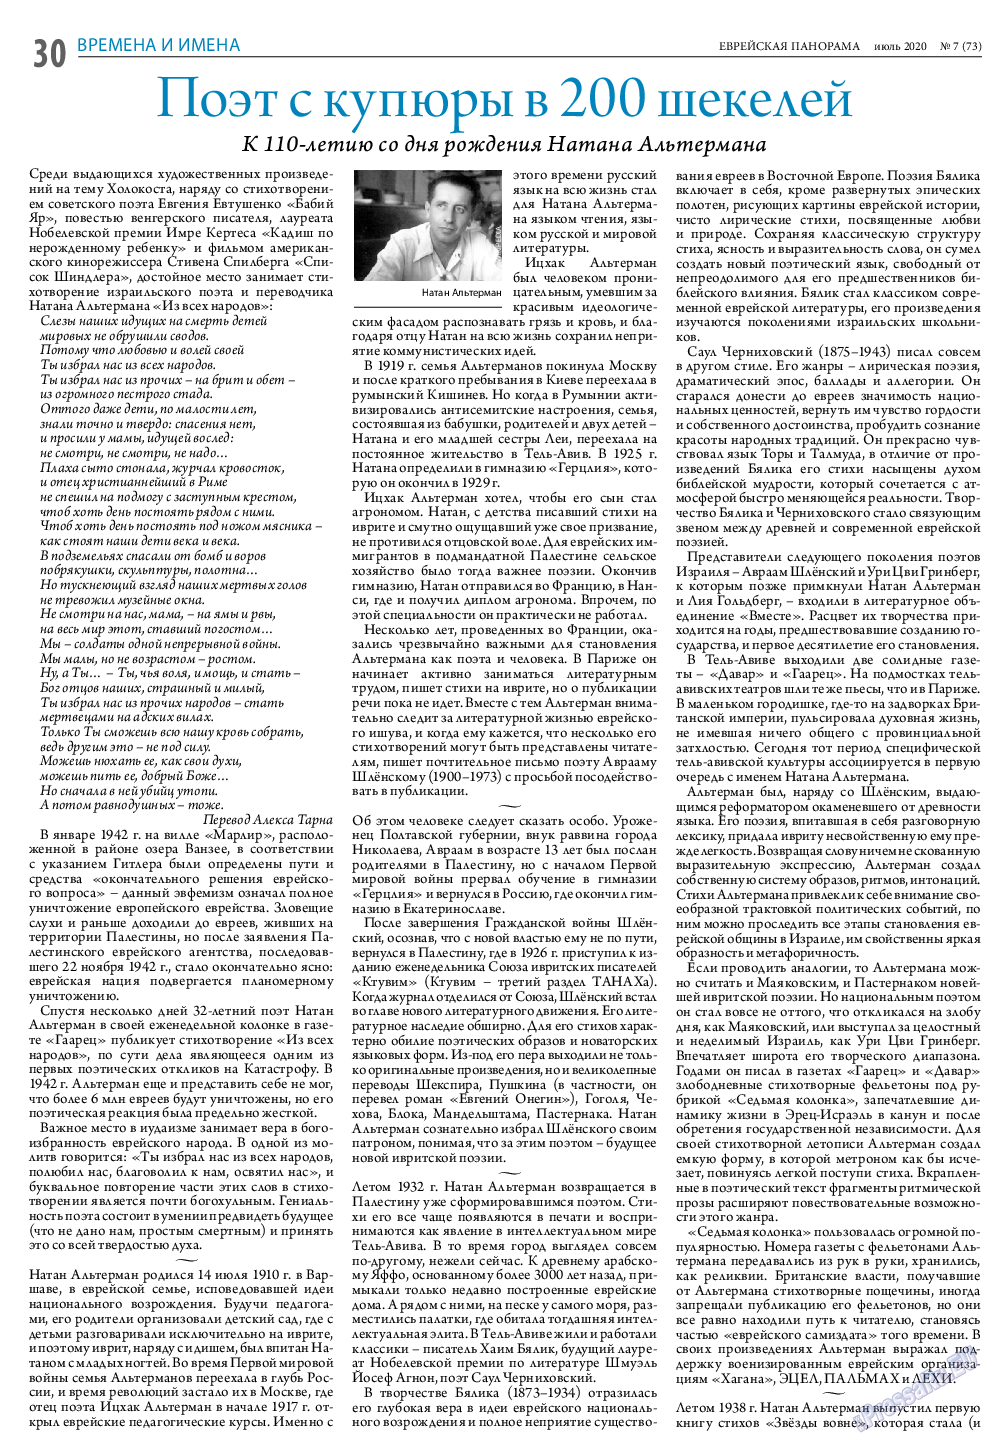 Еврейская панорама, газета. 2020 №7 стр.30